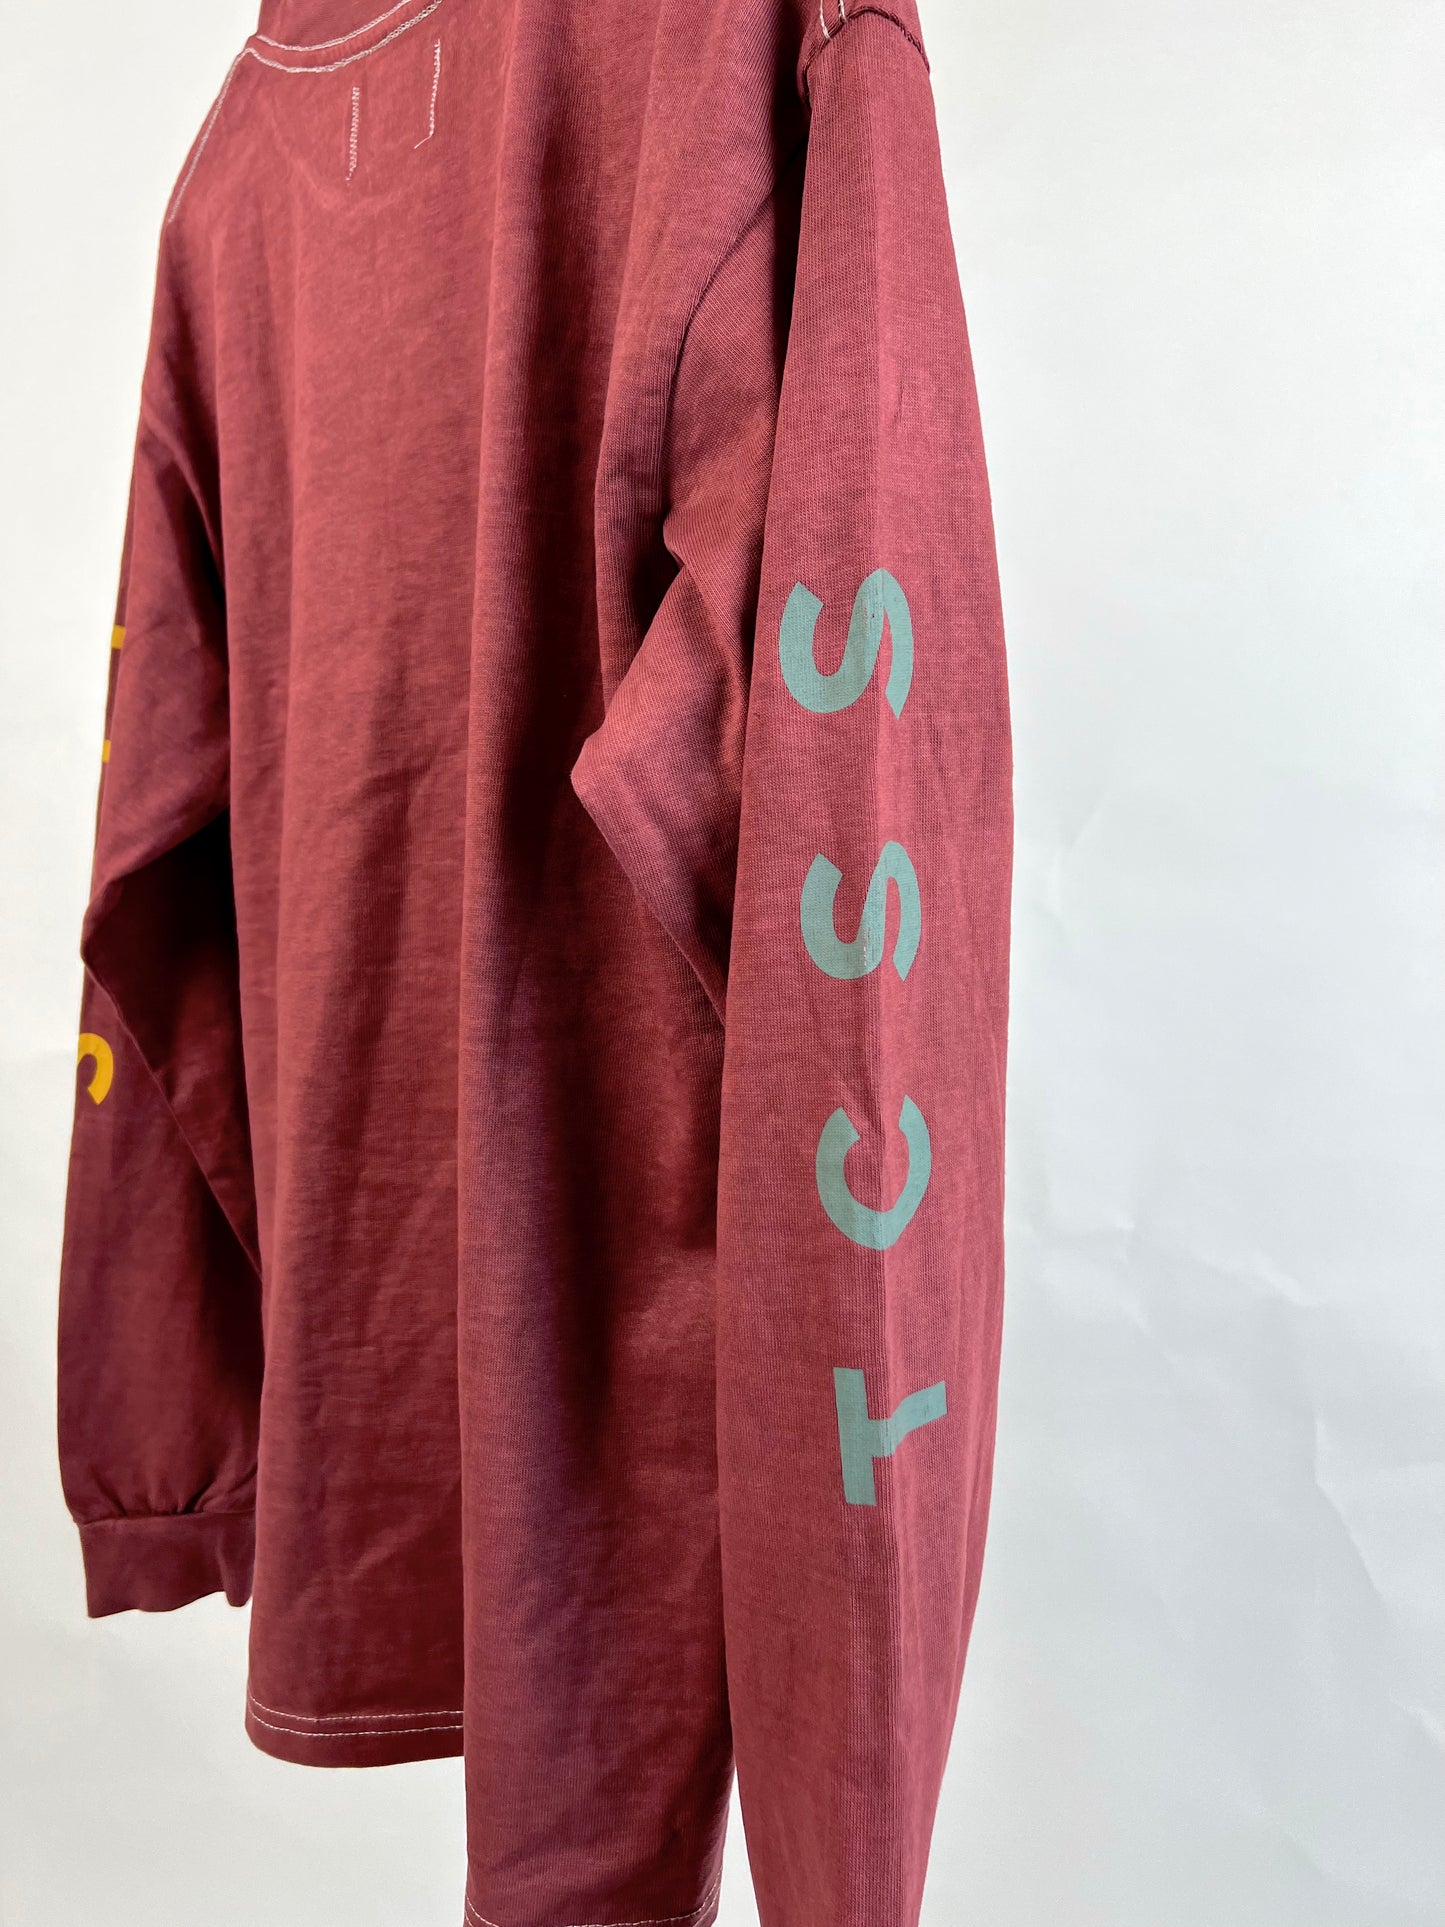 Critical Slide/TCSS "STANDARD LONG SLEEVE T-shirt in burnt red